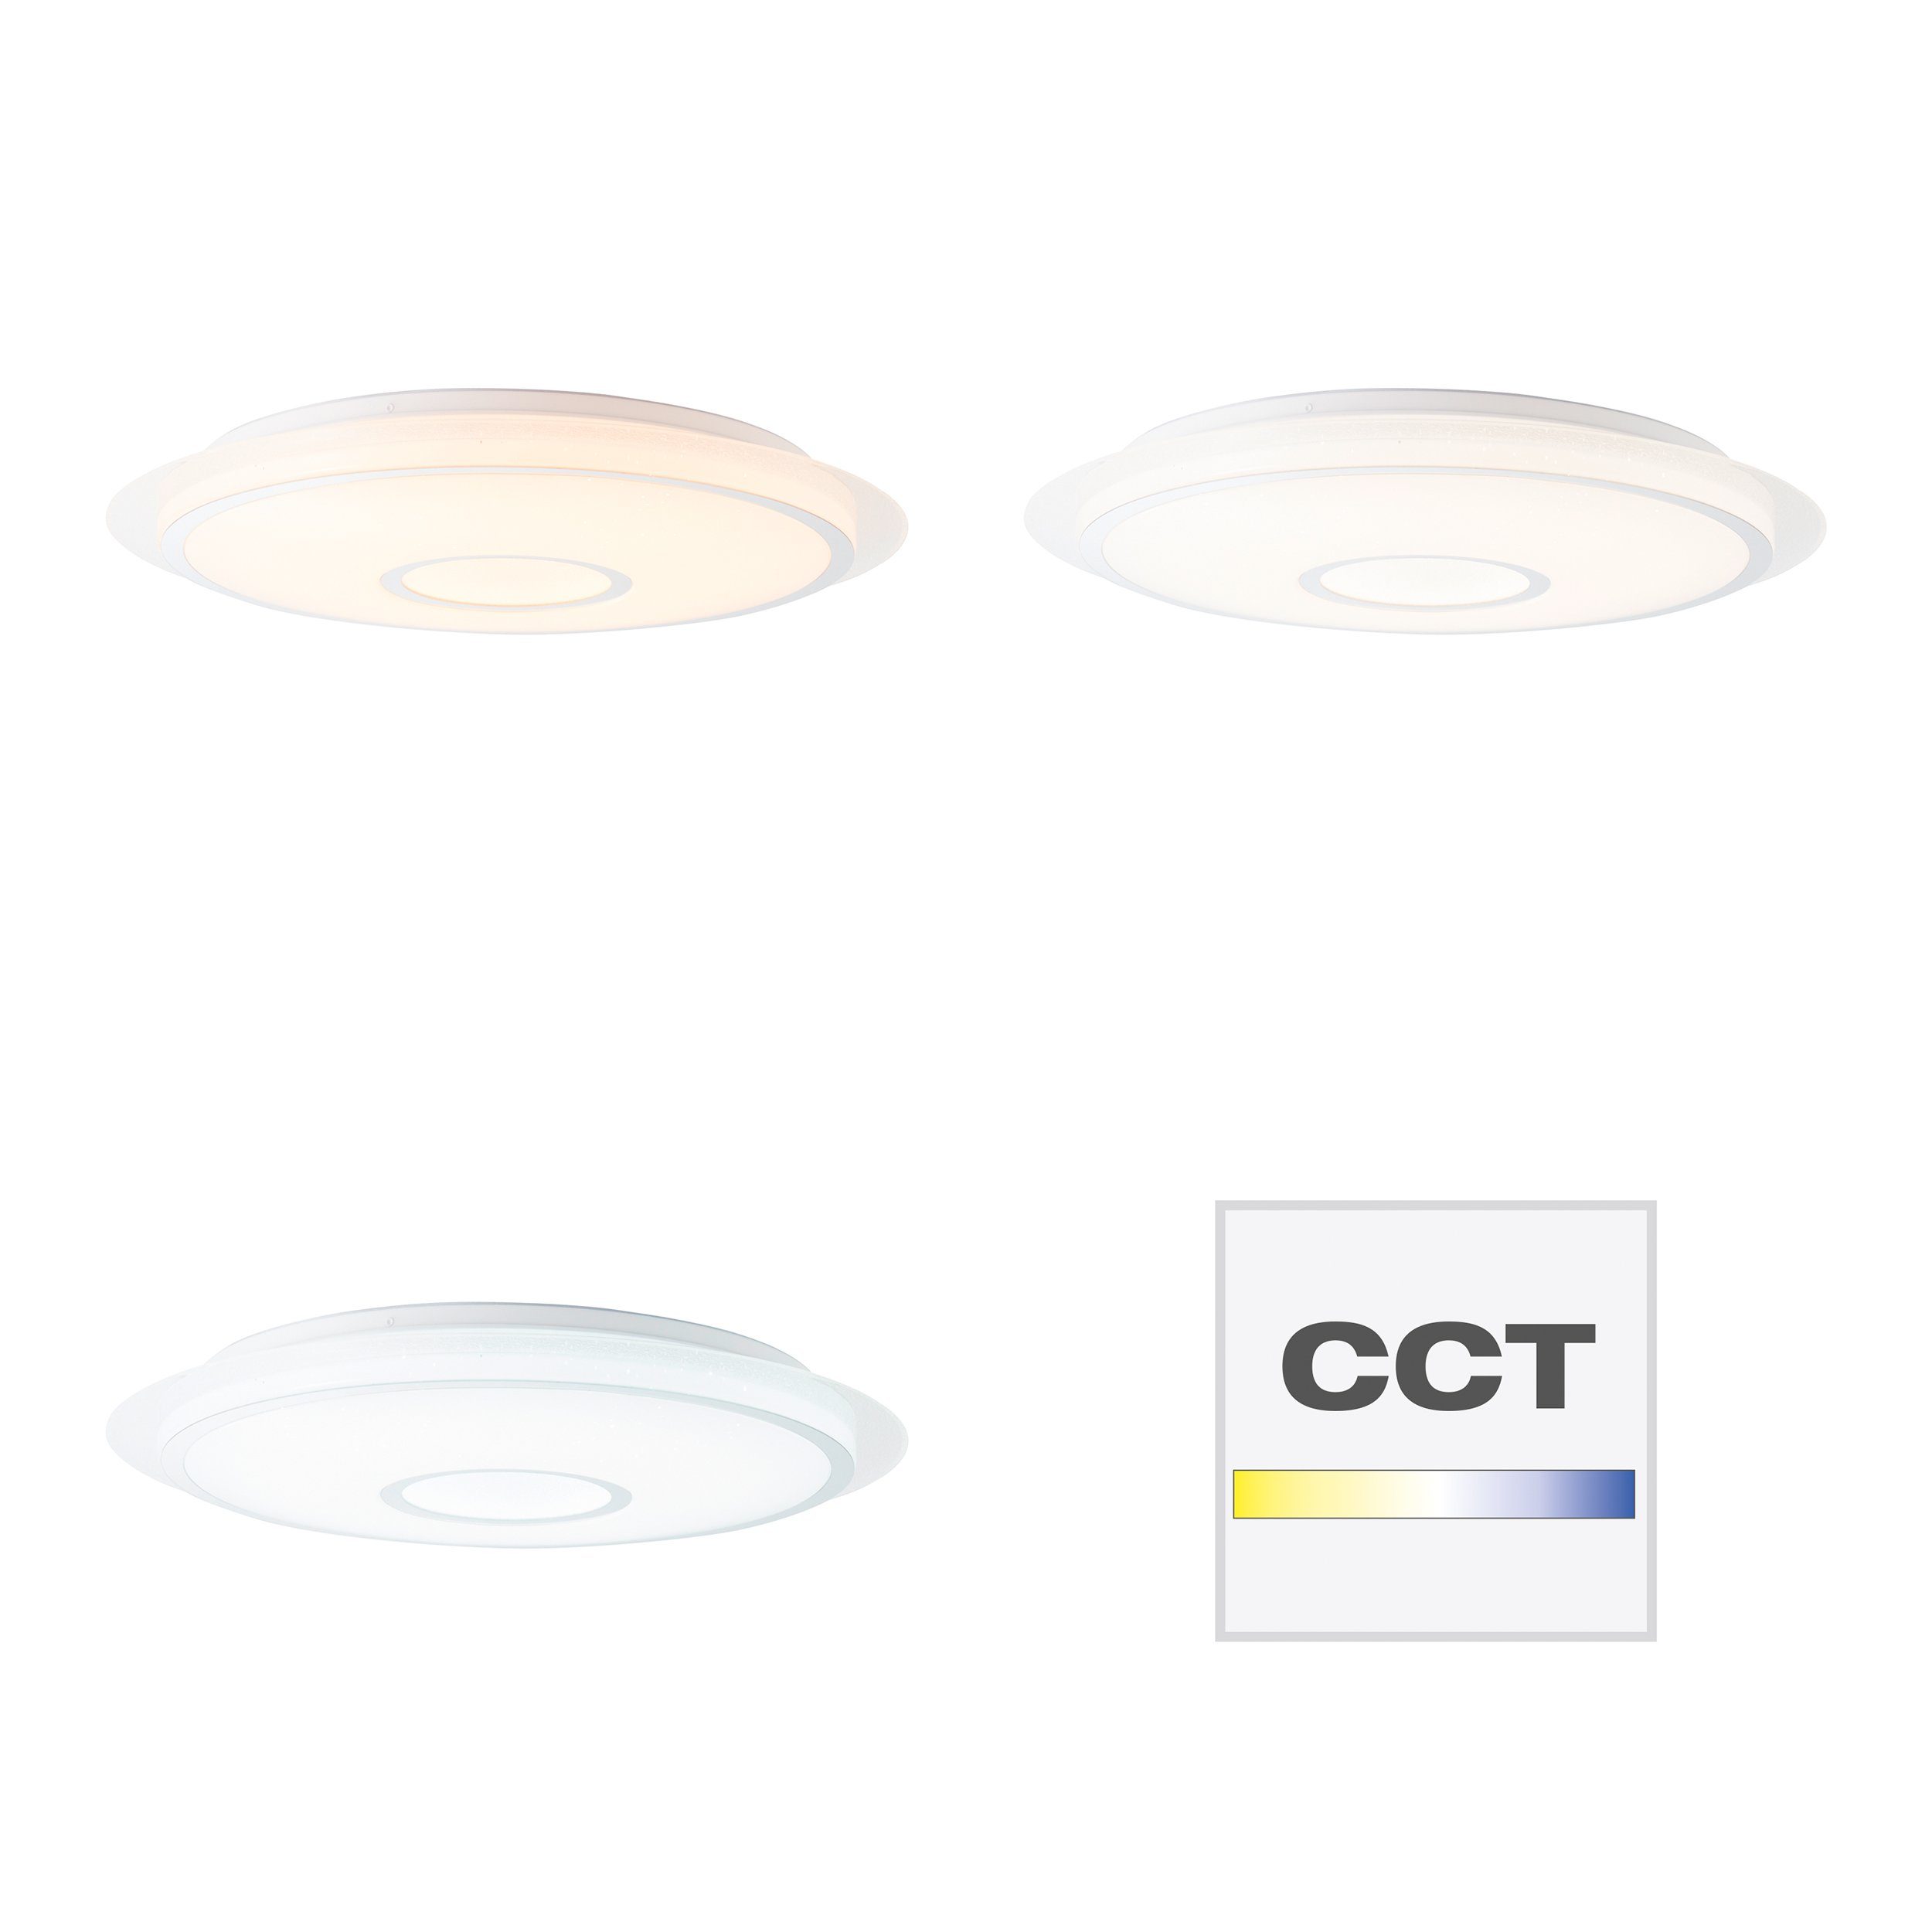 Lightbox LED CCT, Sternenglanz 56 dimmbar, RGB, integriert, Ø lm, kaltweiß, Deckenlampe, cm, - warmweiß LED RGB 3100 fest Deckenleuchte, LED